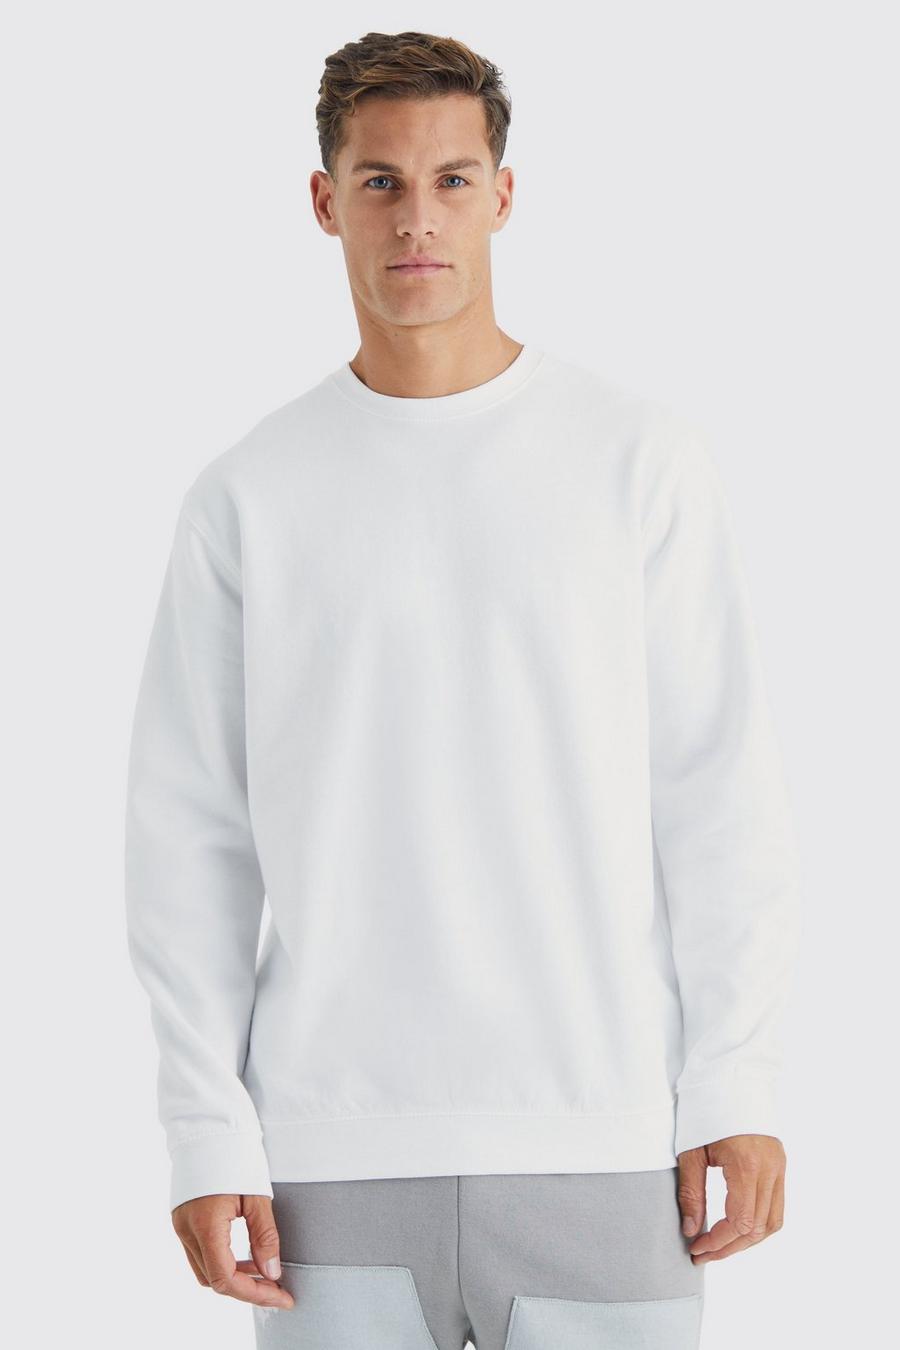 White Tall Oversized Basic Sweatshirt   